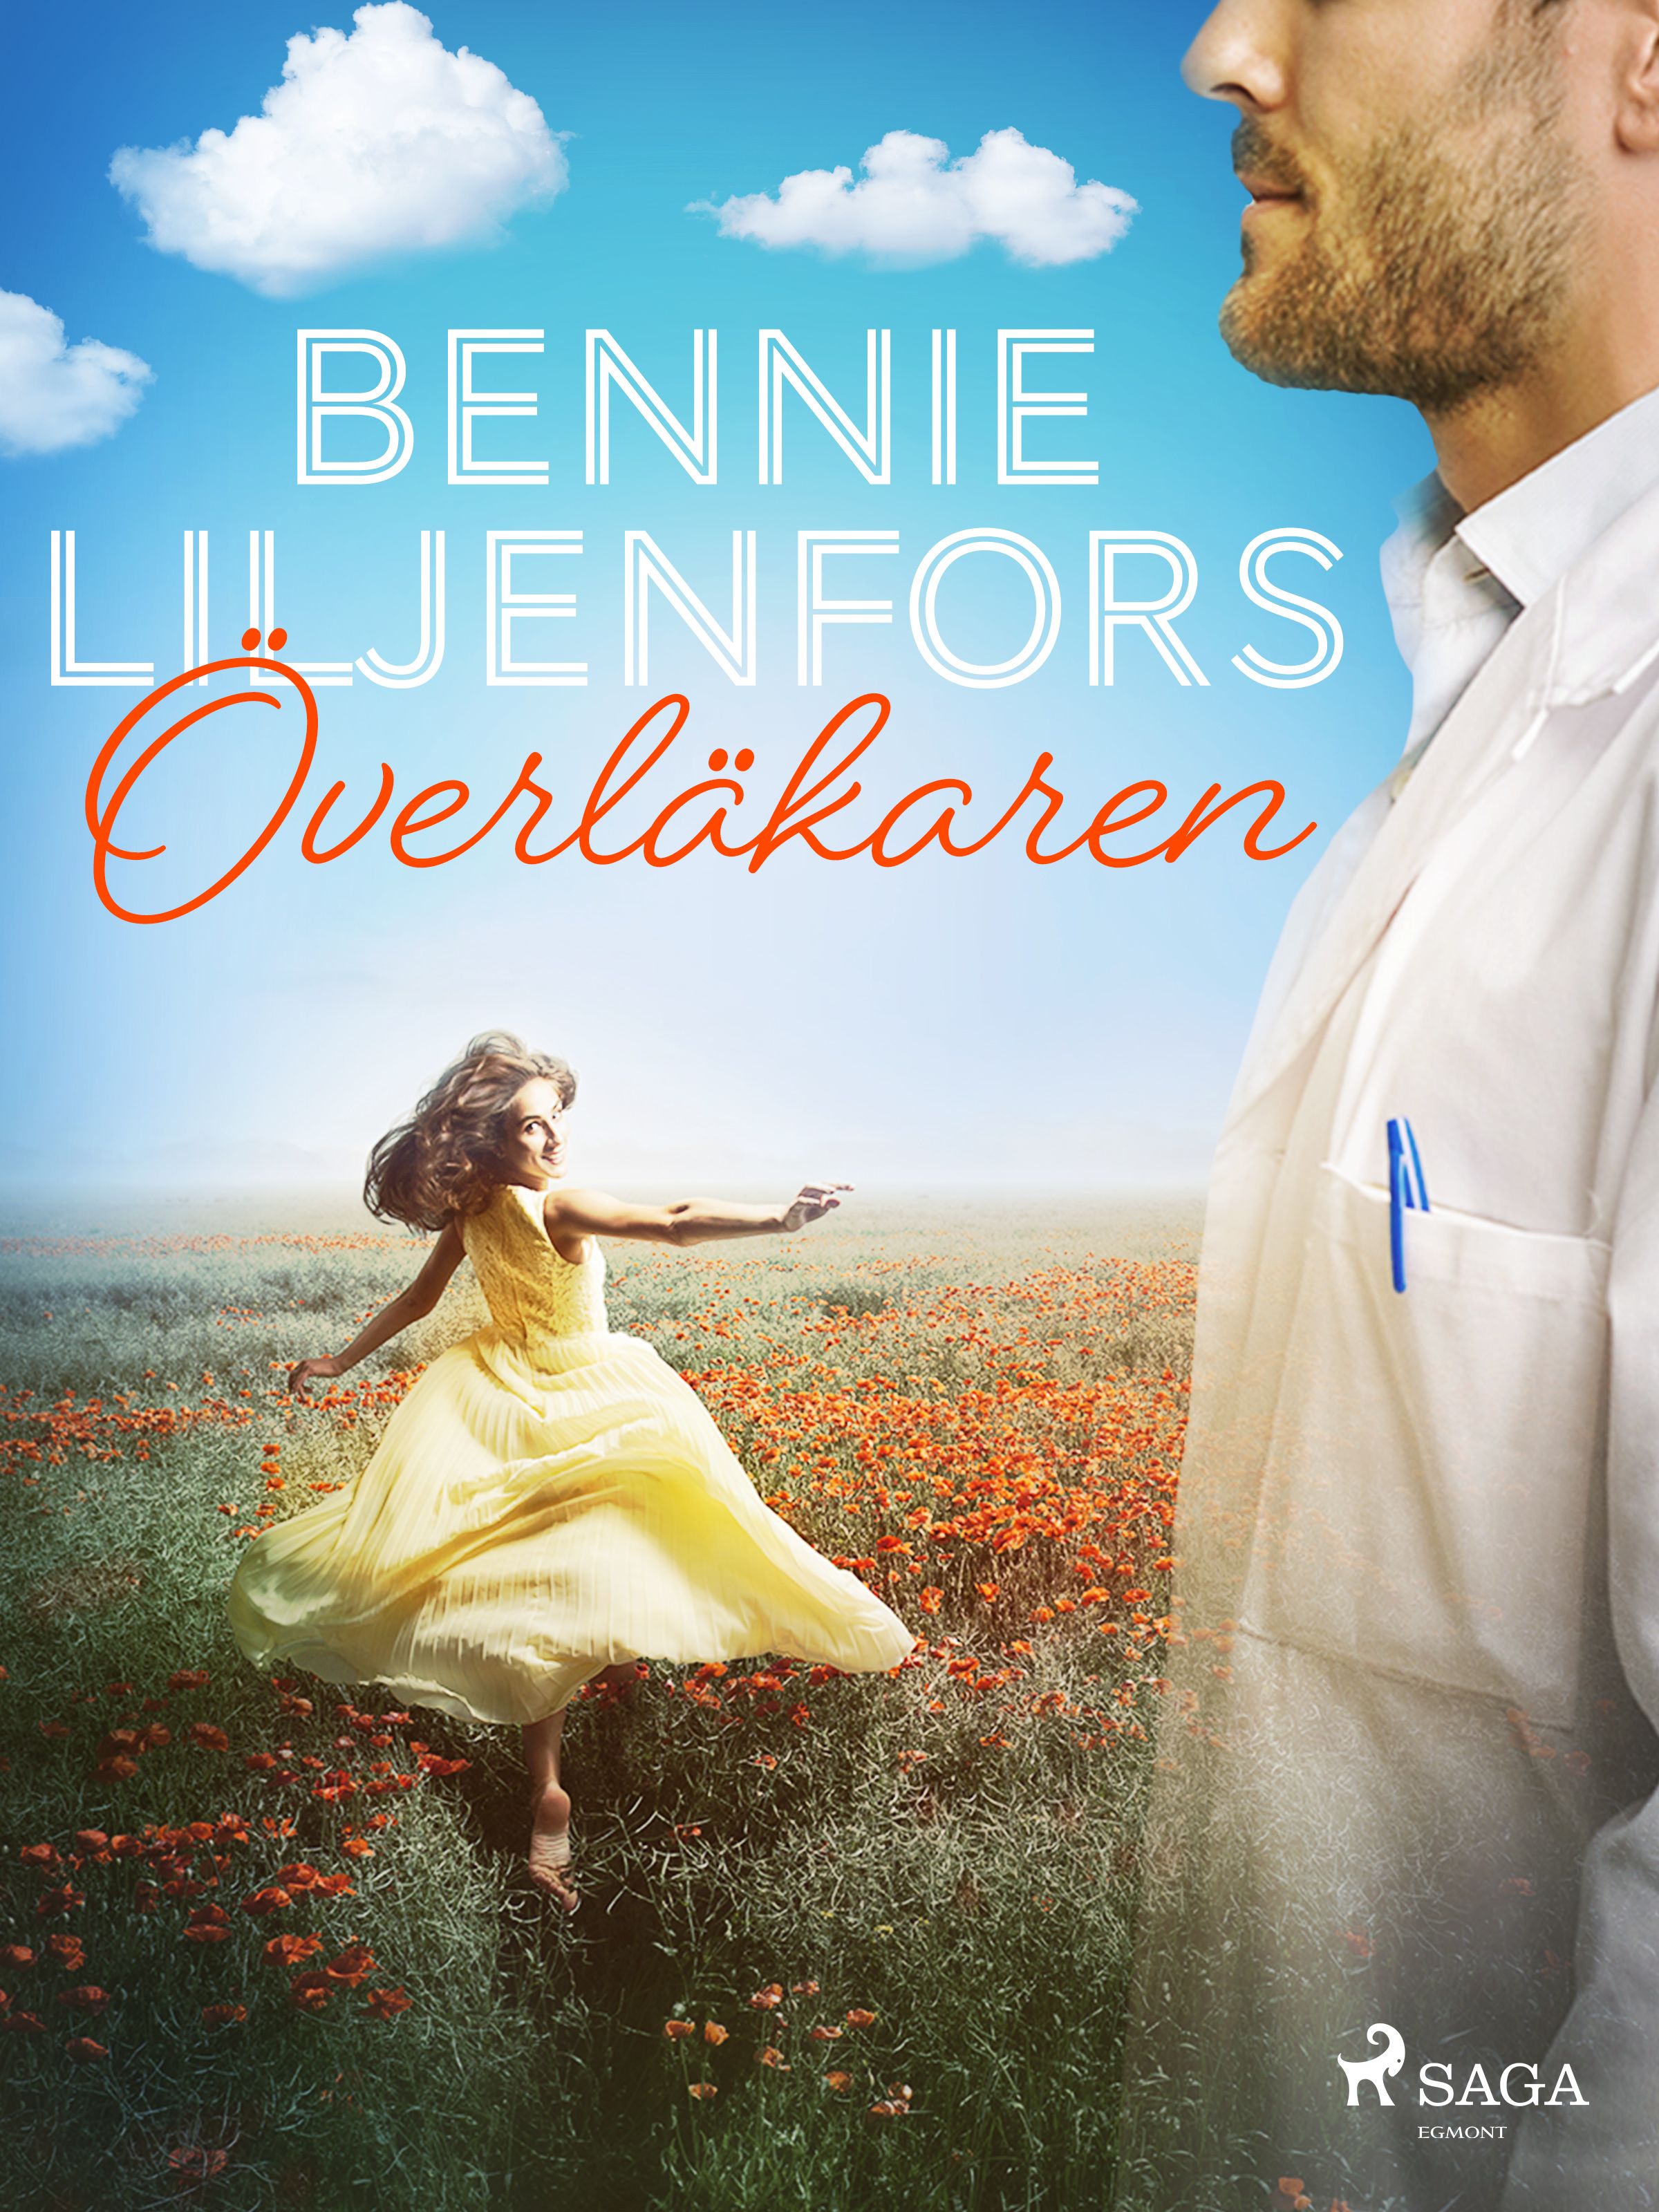 Överläkaren, eBook by Bennie Liljenfors